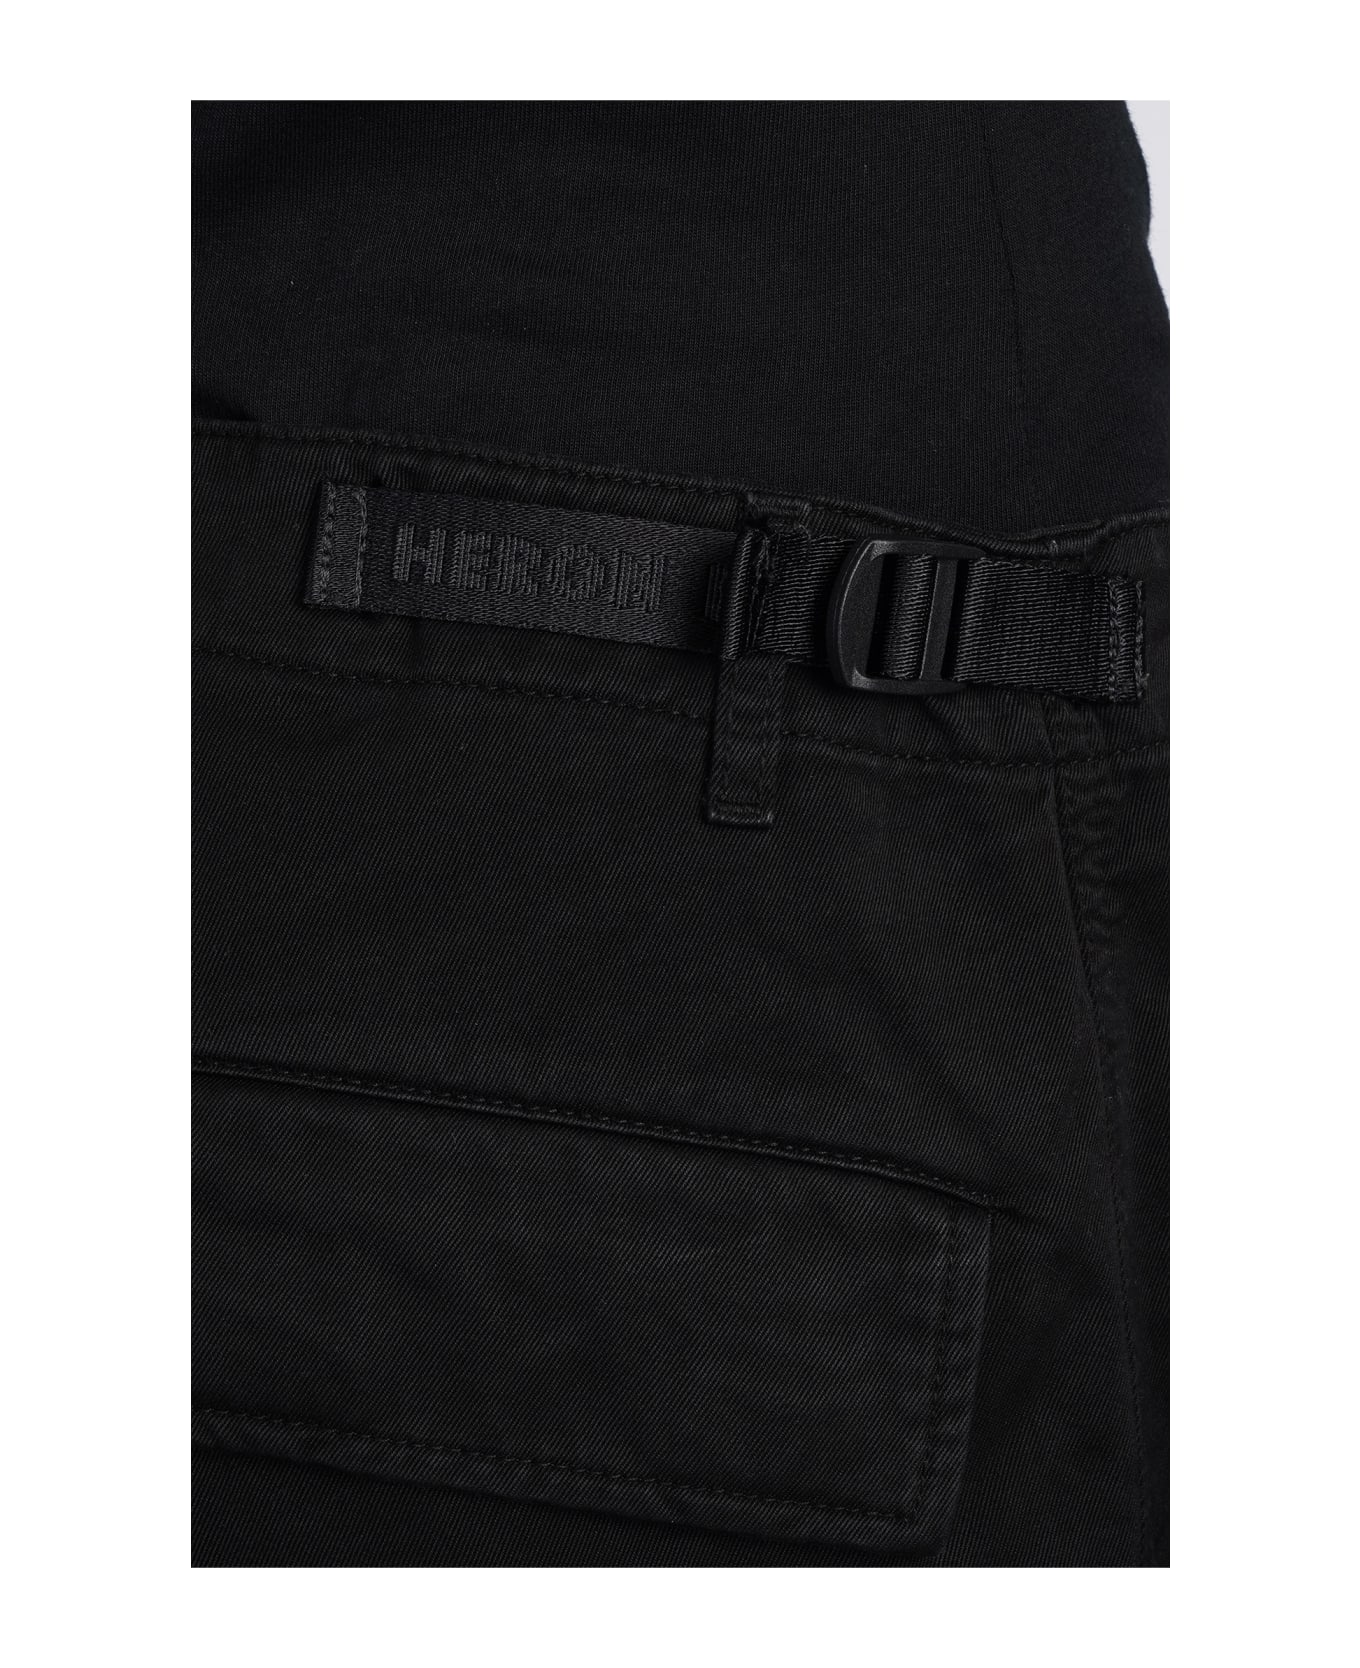 HERON PRESTON Pants In Black Cotton - black